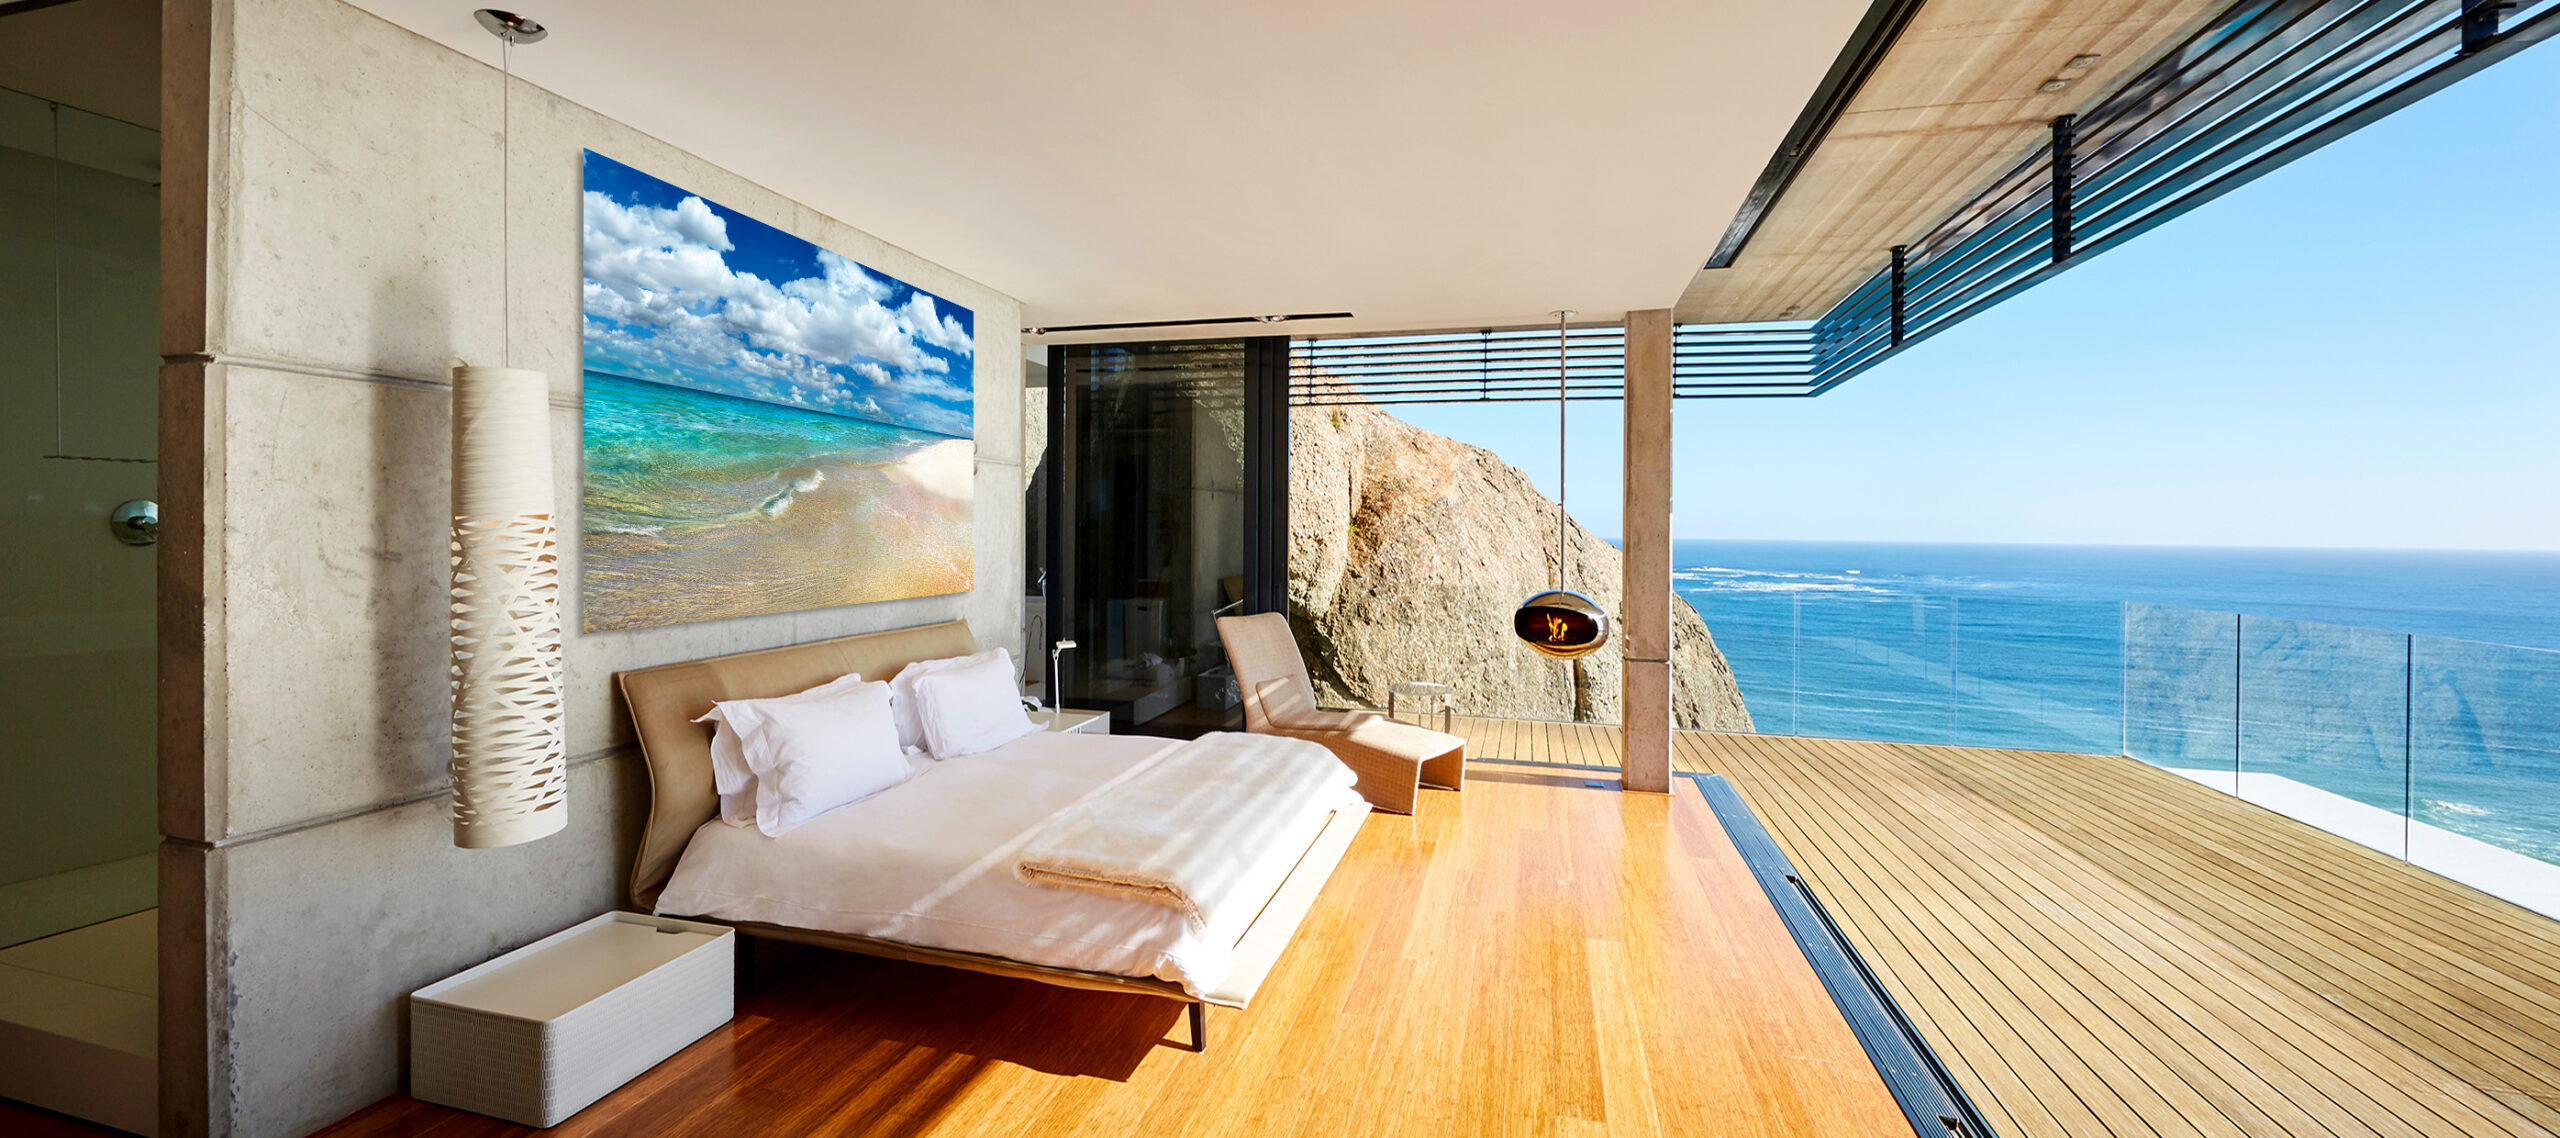 Modern,Luxury,Bedroom,Open,To,Patio,With,Sunny,Ocean,View